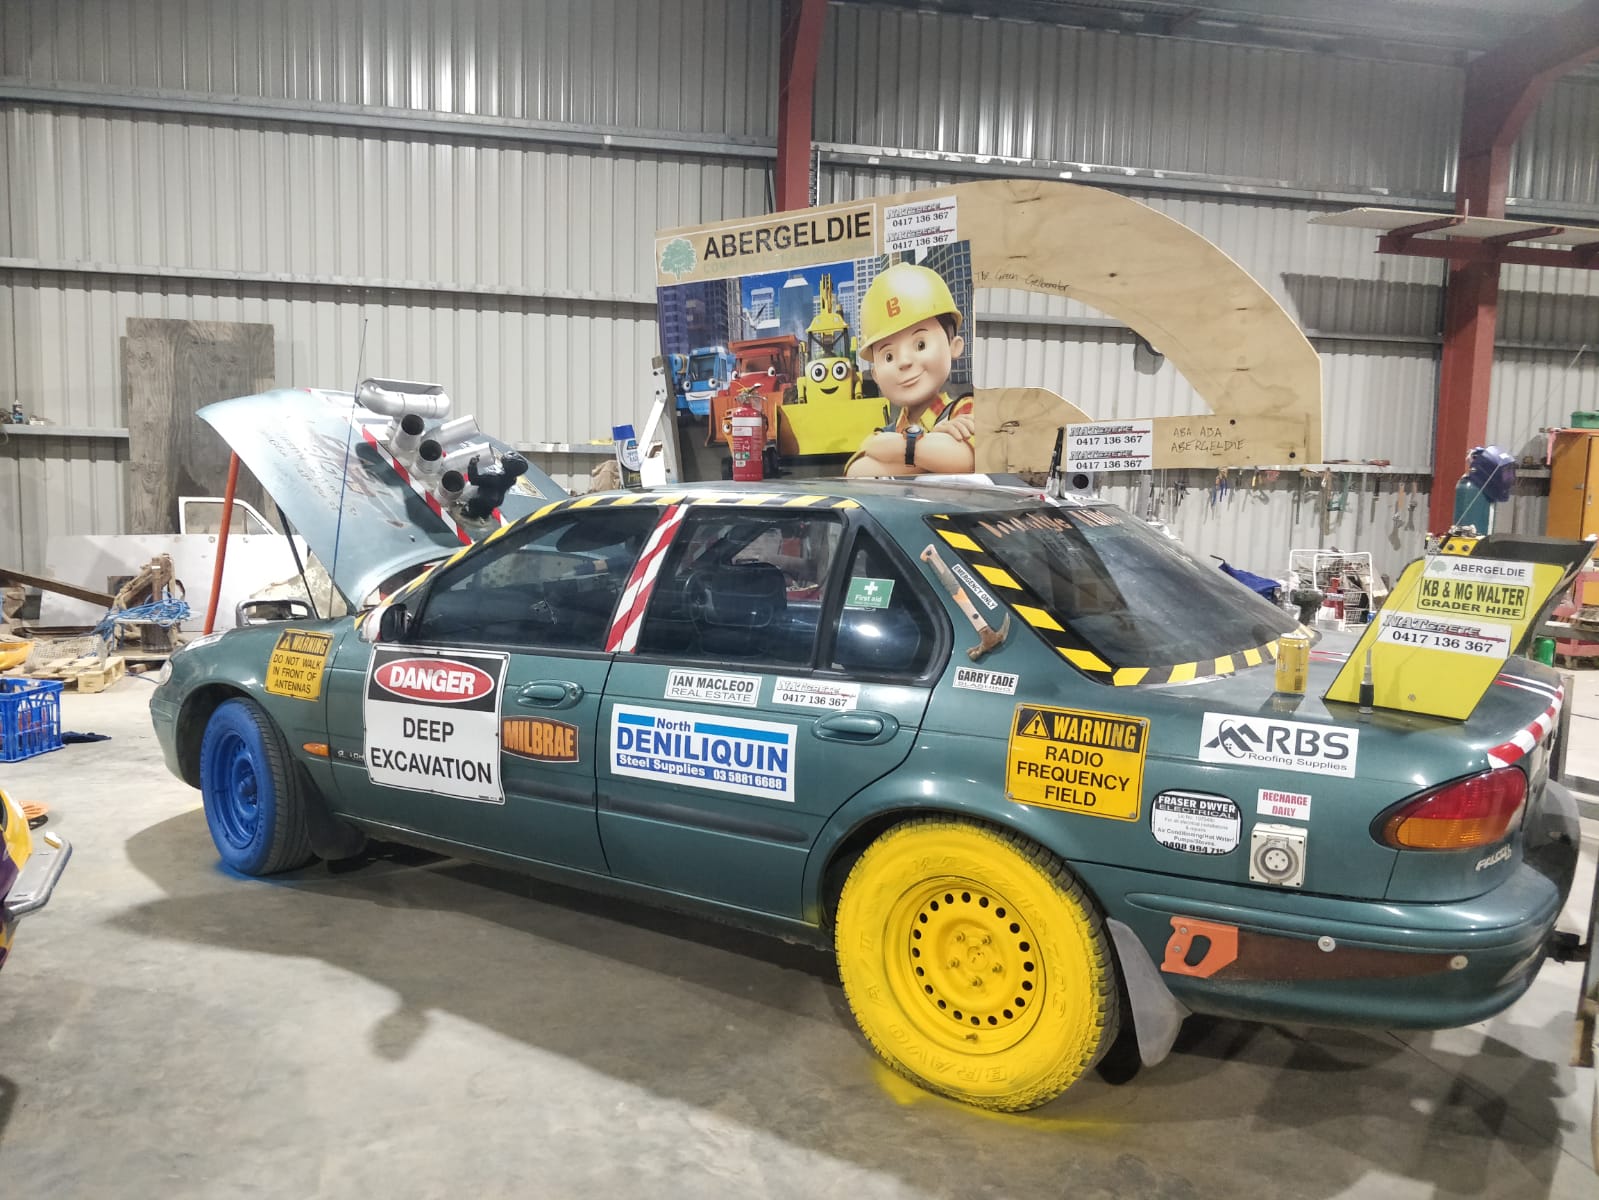 The Abergeldie Rally car ready